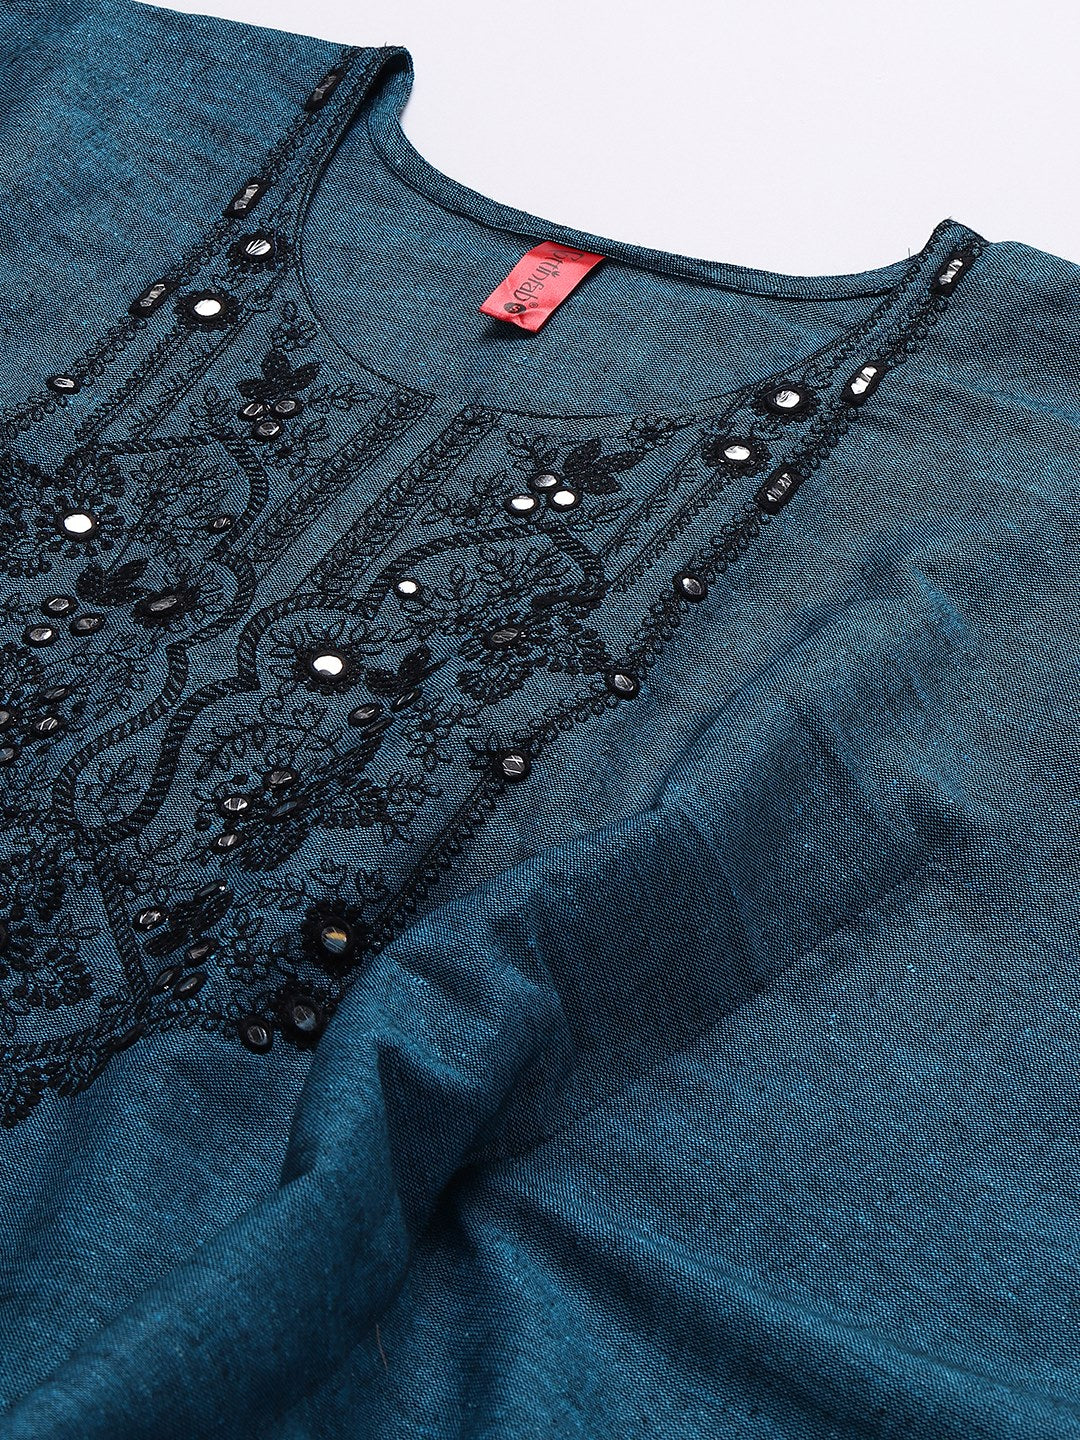 Blue Ethnic Motifs Embroidered Kaftan Dress